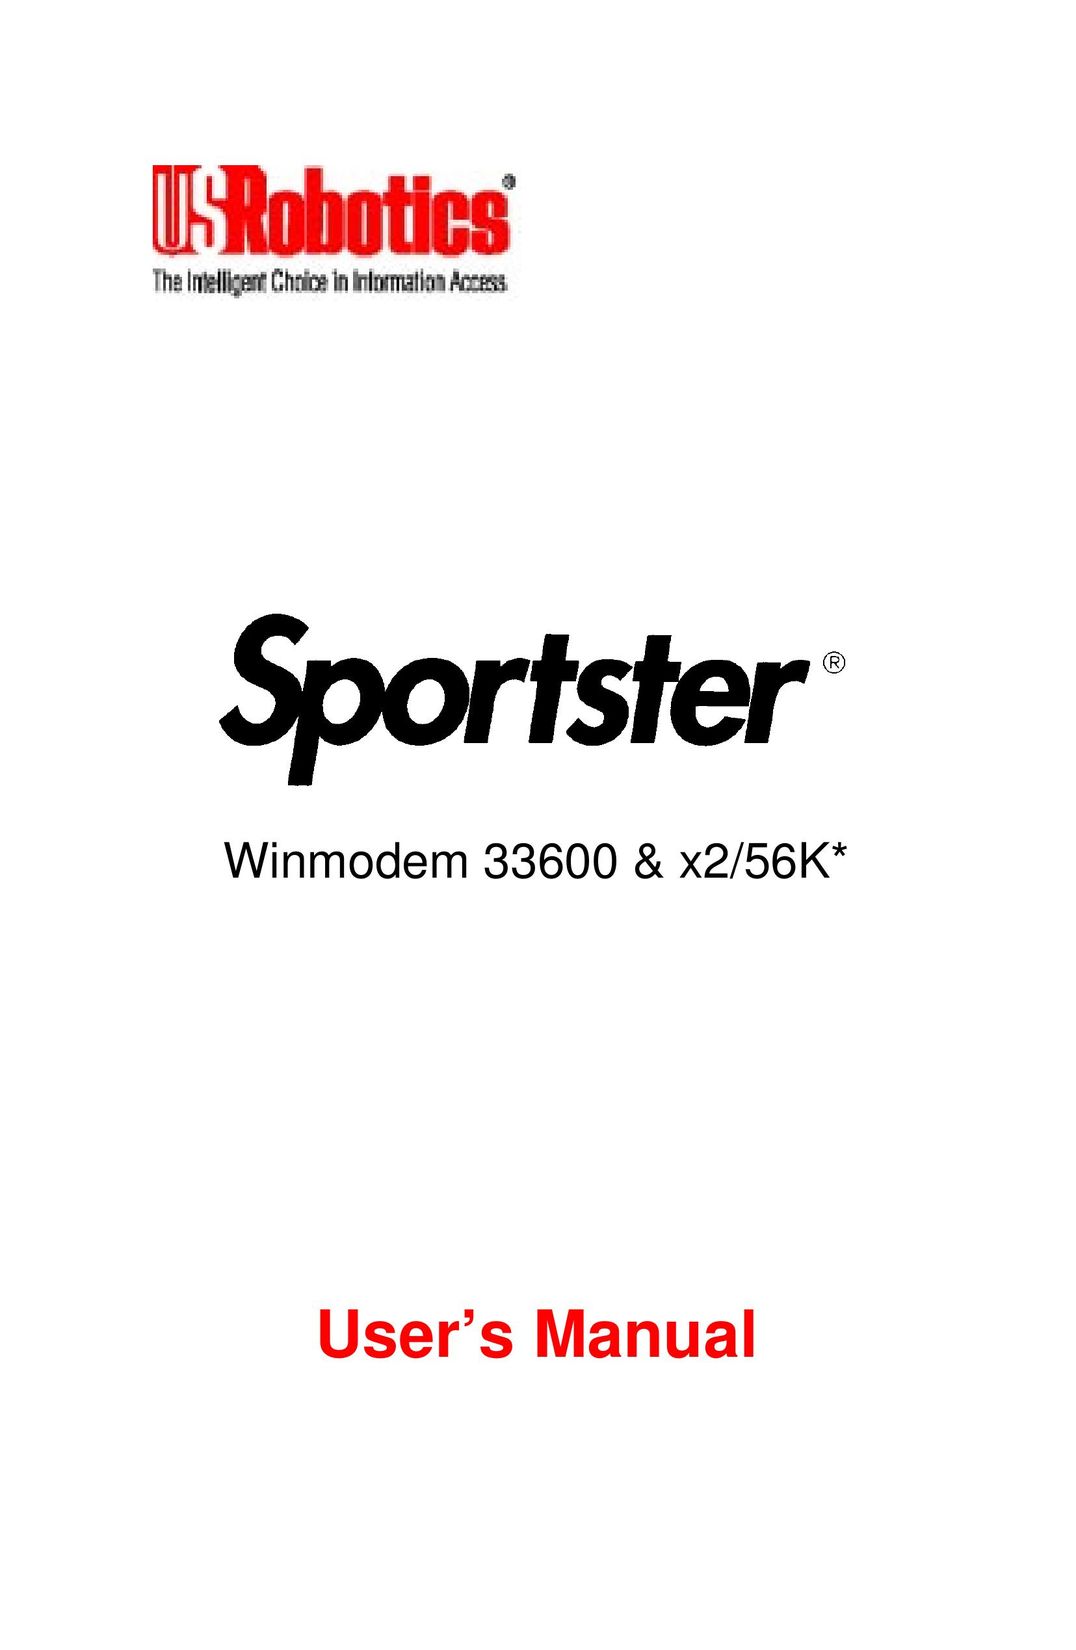 USRobotics x2/56K Network Card User Manual